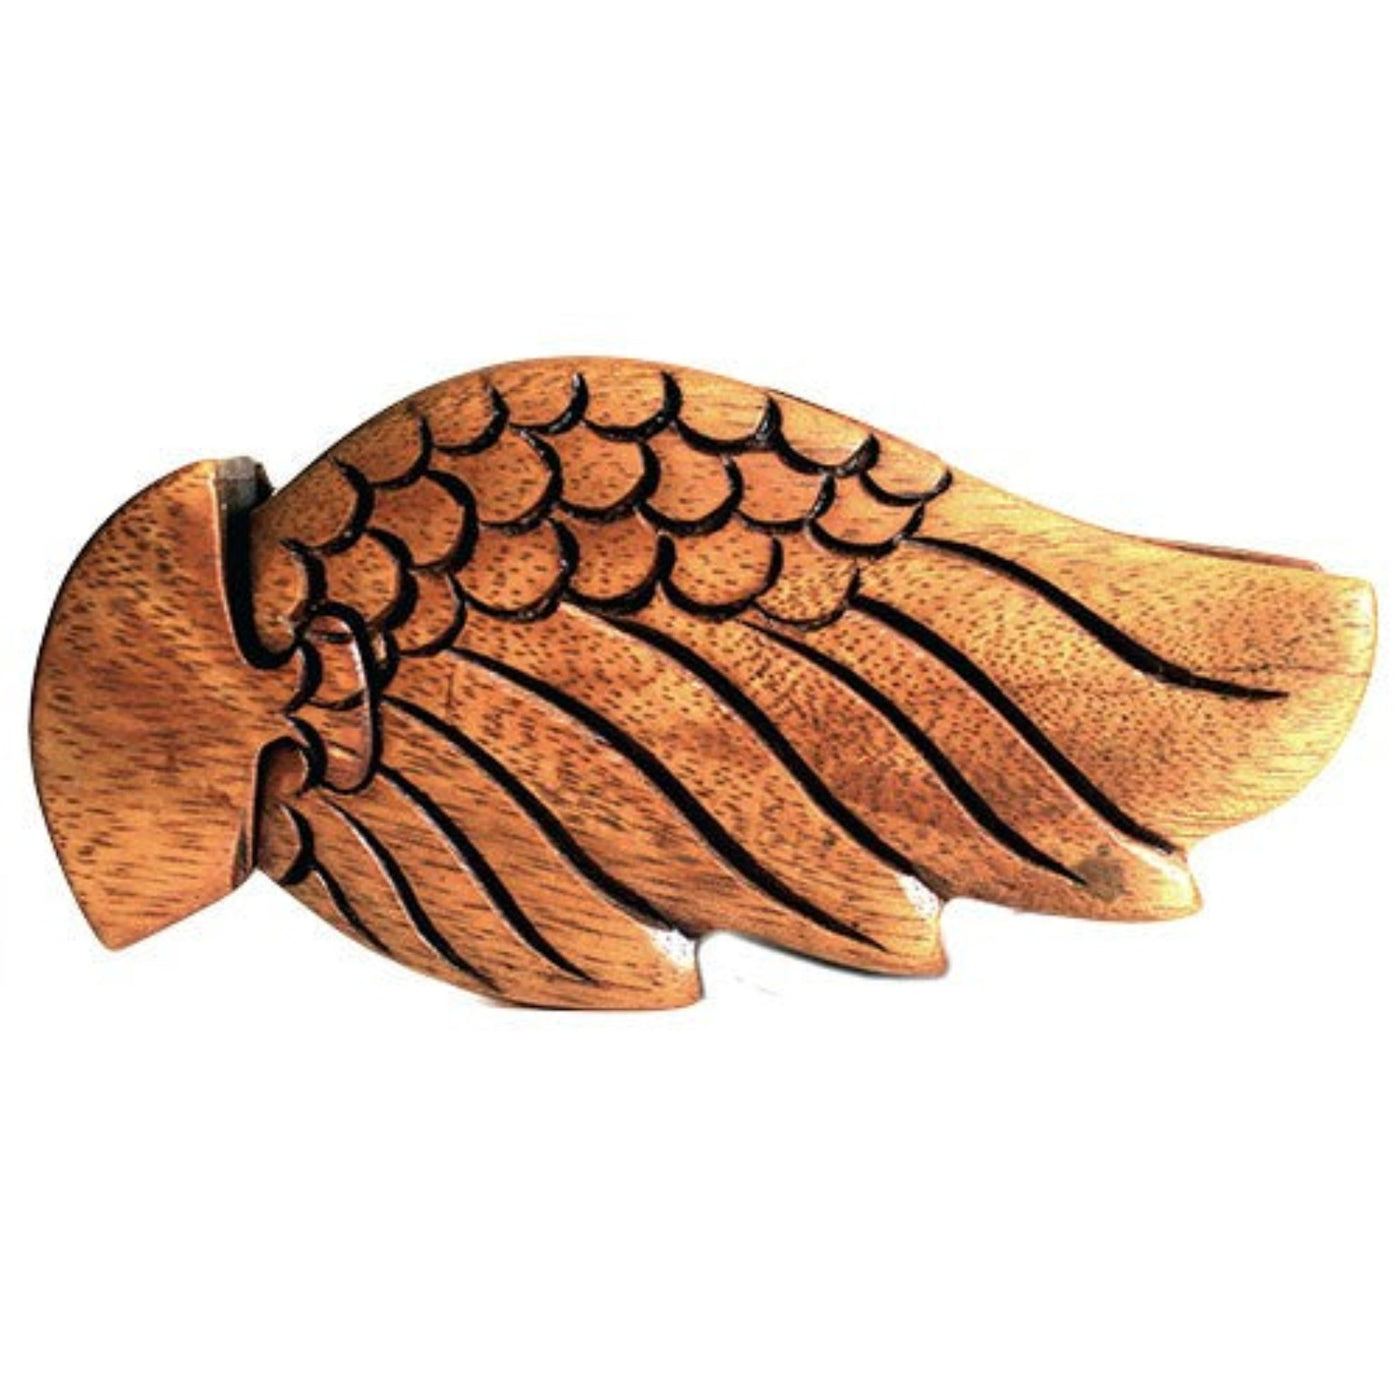 Sheesam Novelty Wooden Angel Wing' Puzzle Storage Box